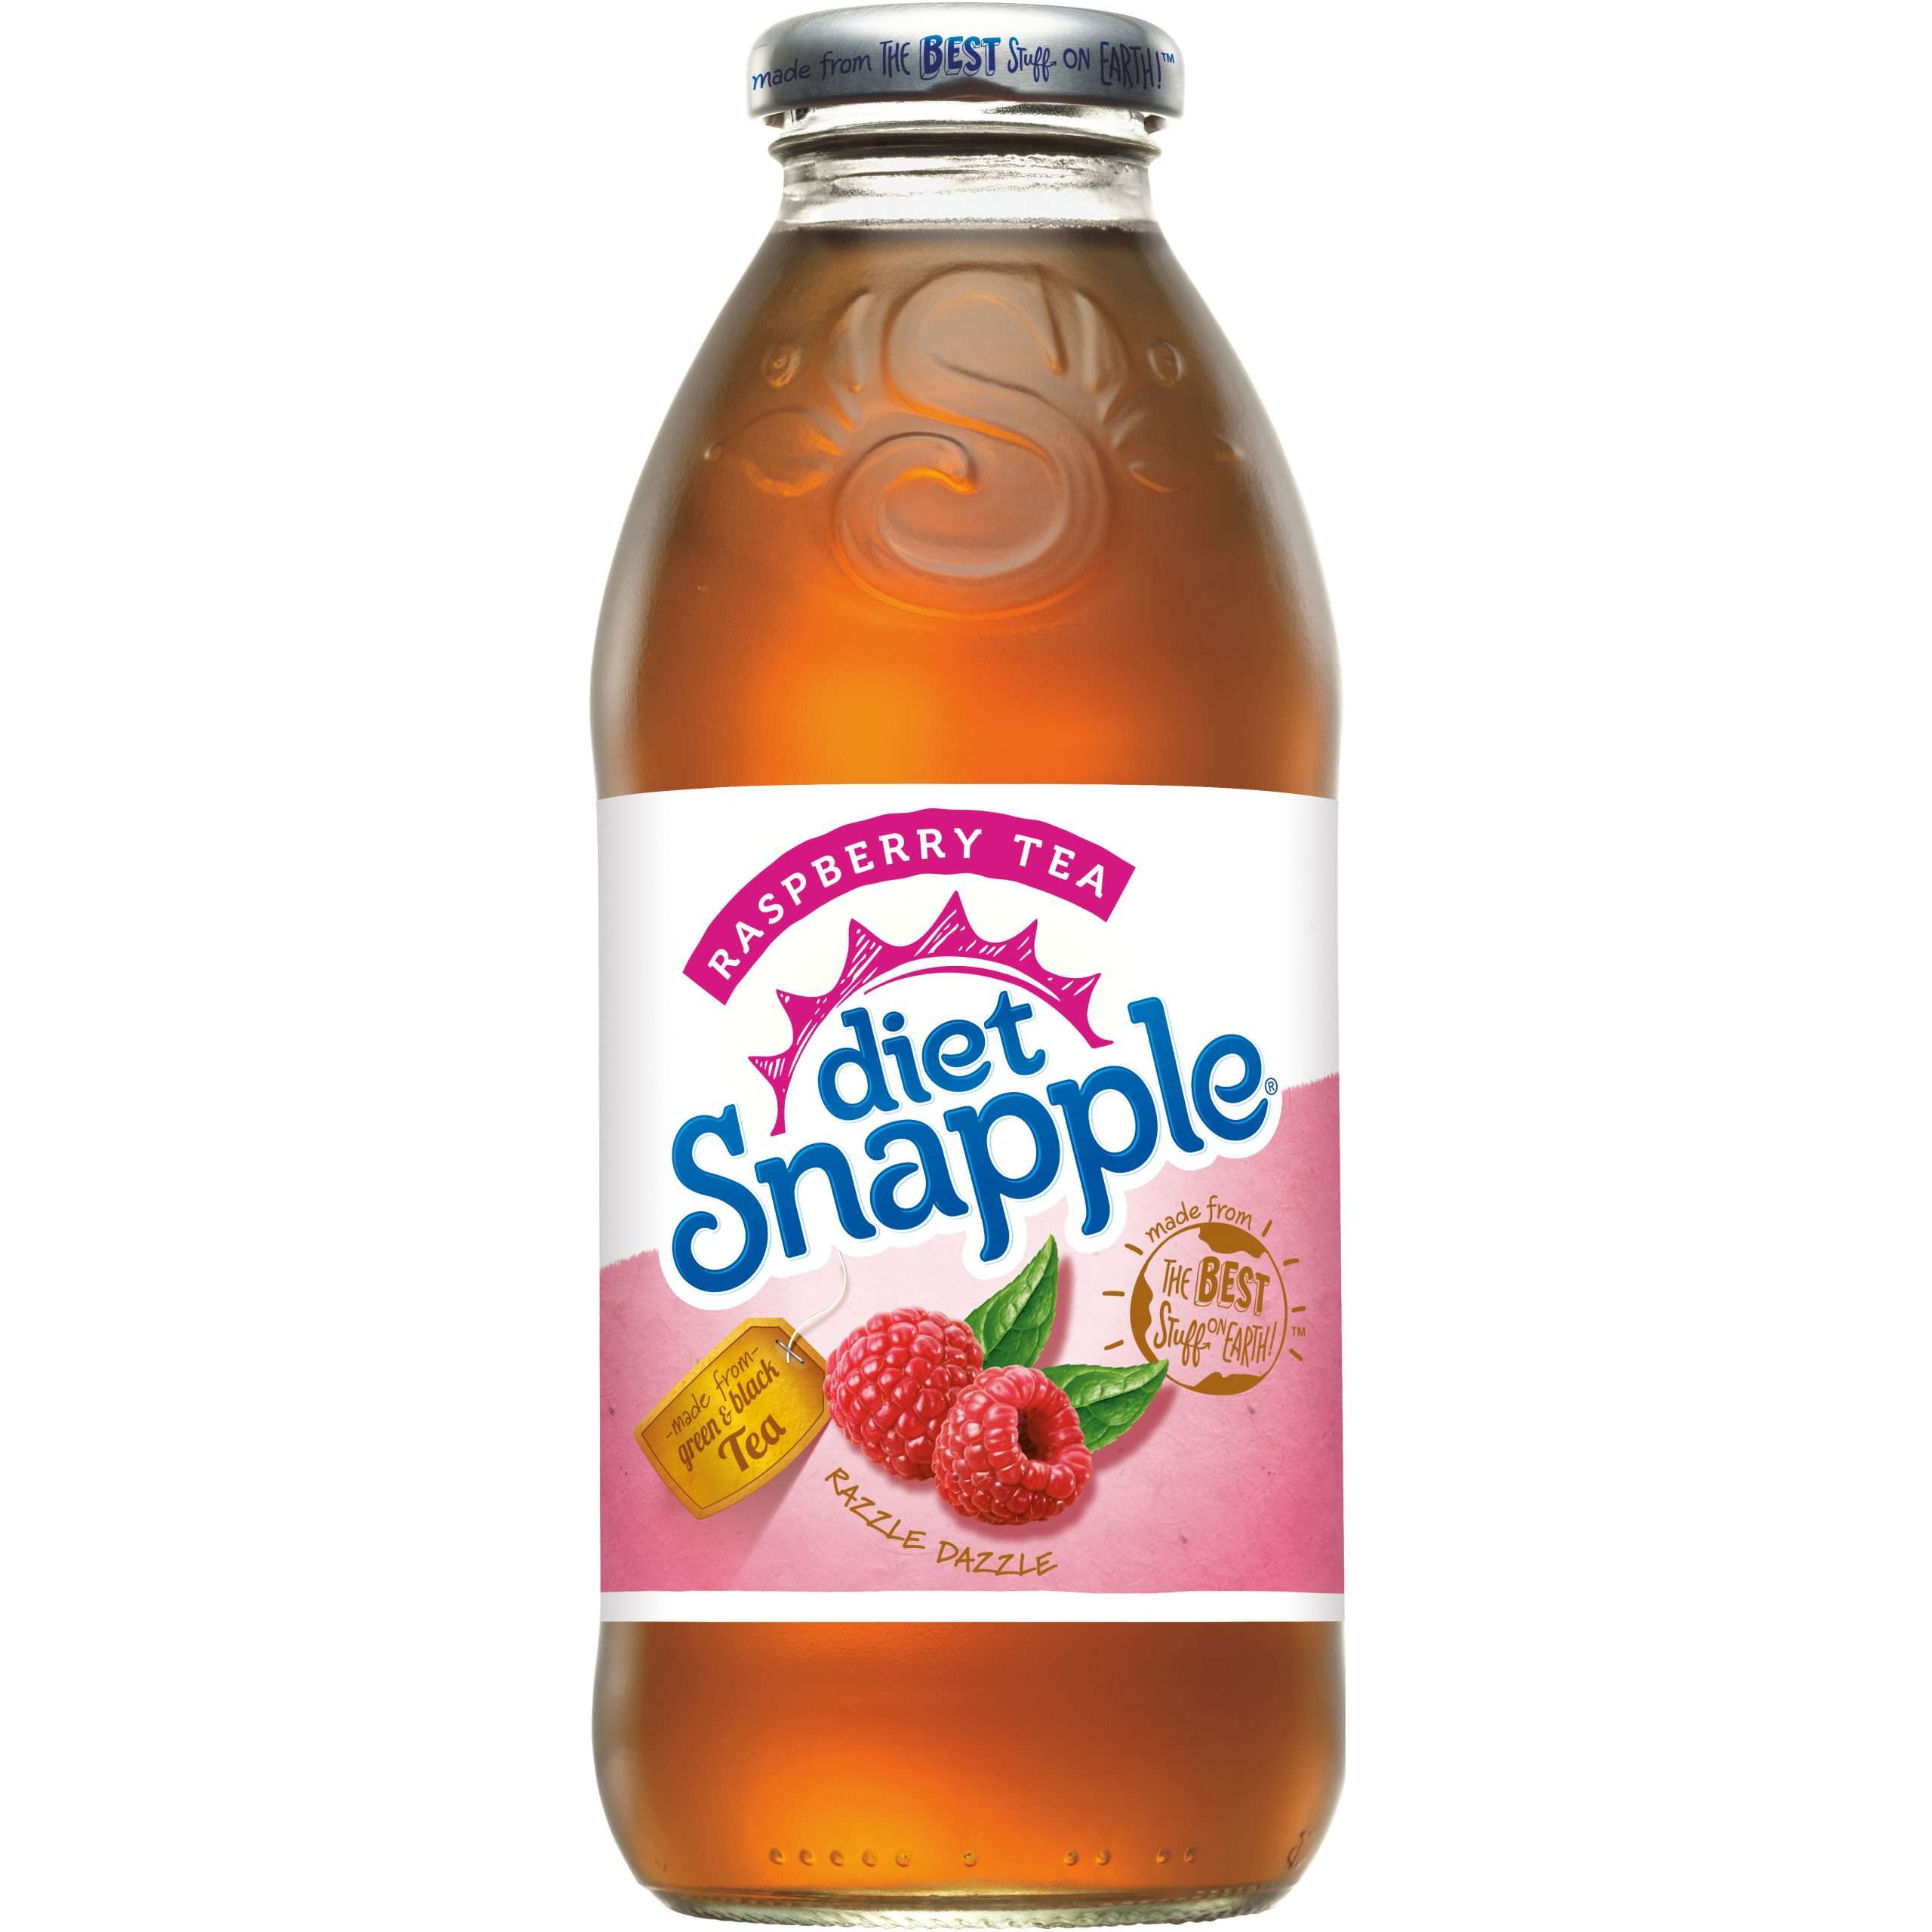 Diet Snapple Raspberry Tea, 16 Fl. Oz.